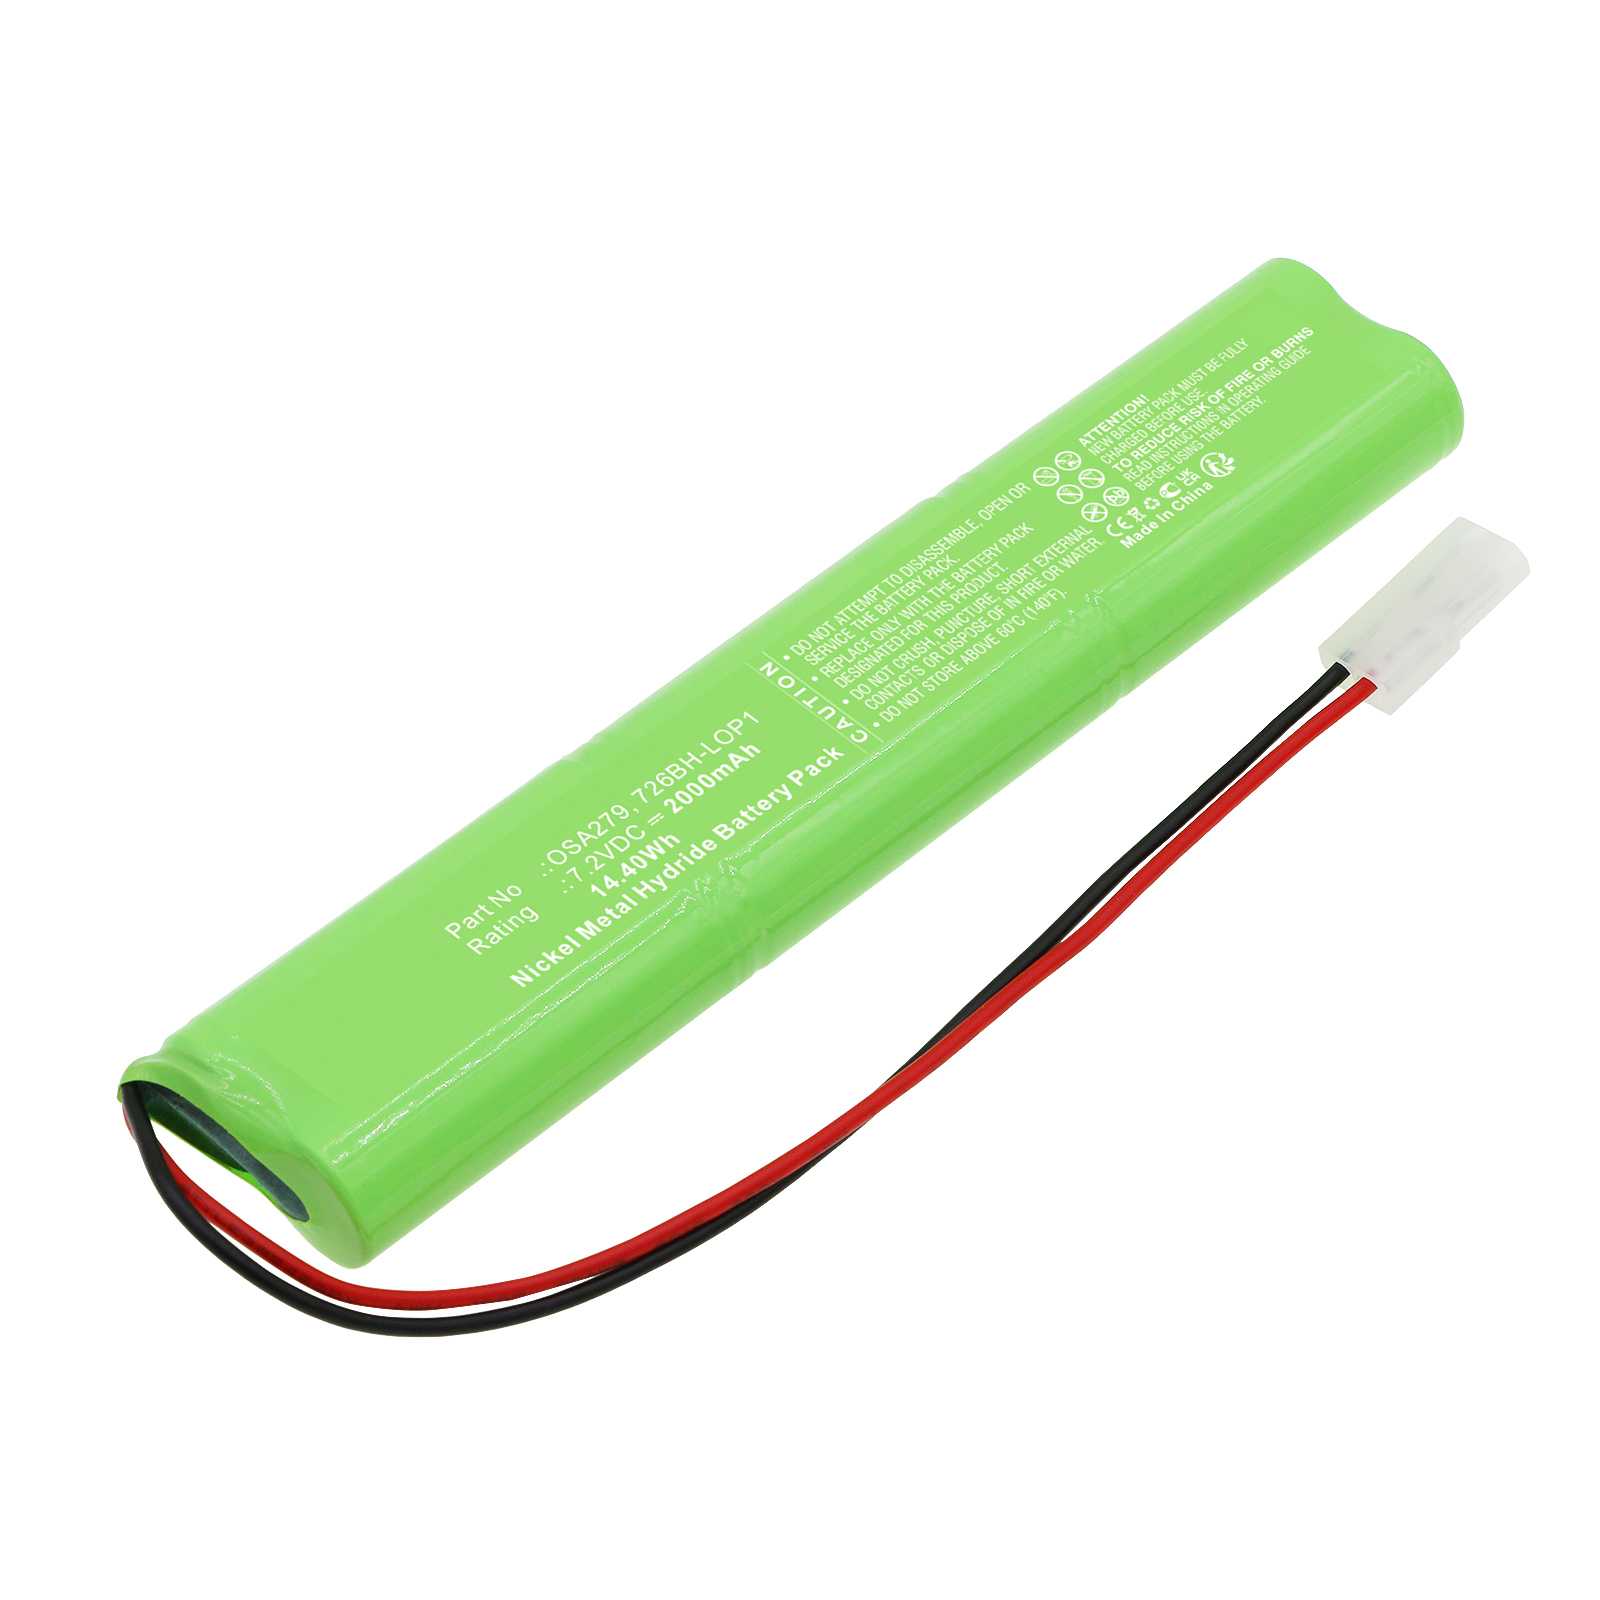 Batteries for PowersonicEmergency Lighting